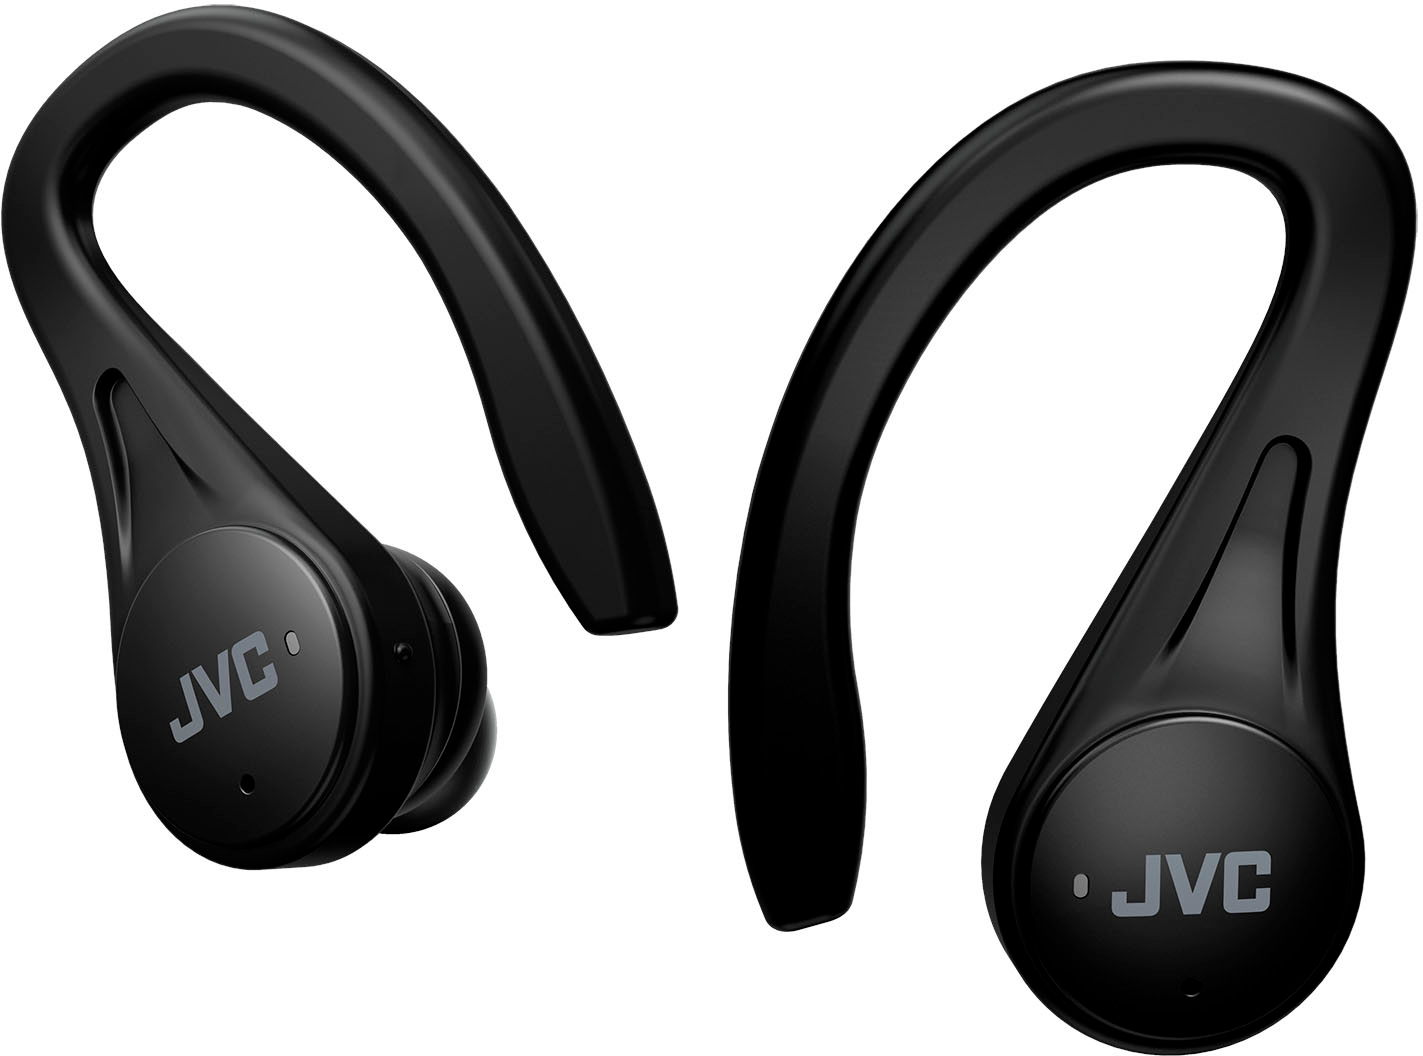 Auriculares deportivos True Wireless JVC HA-EC25T-A-U azul con Bluetooth